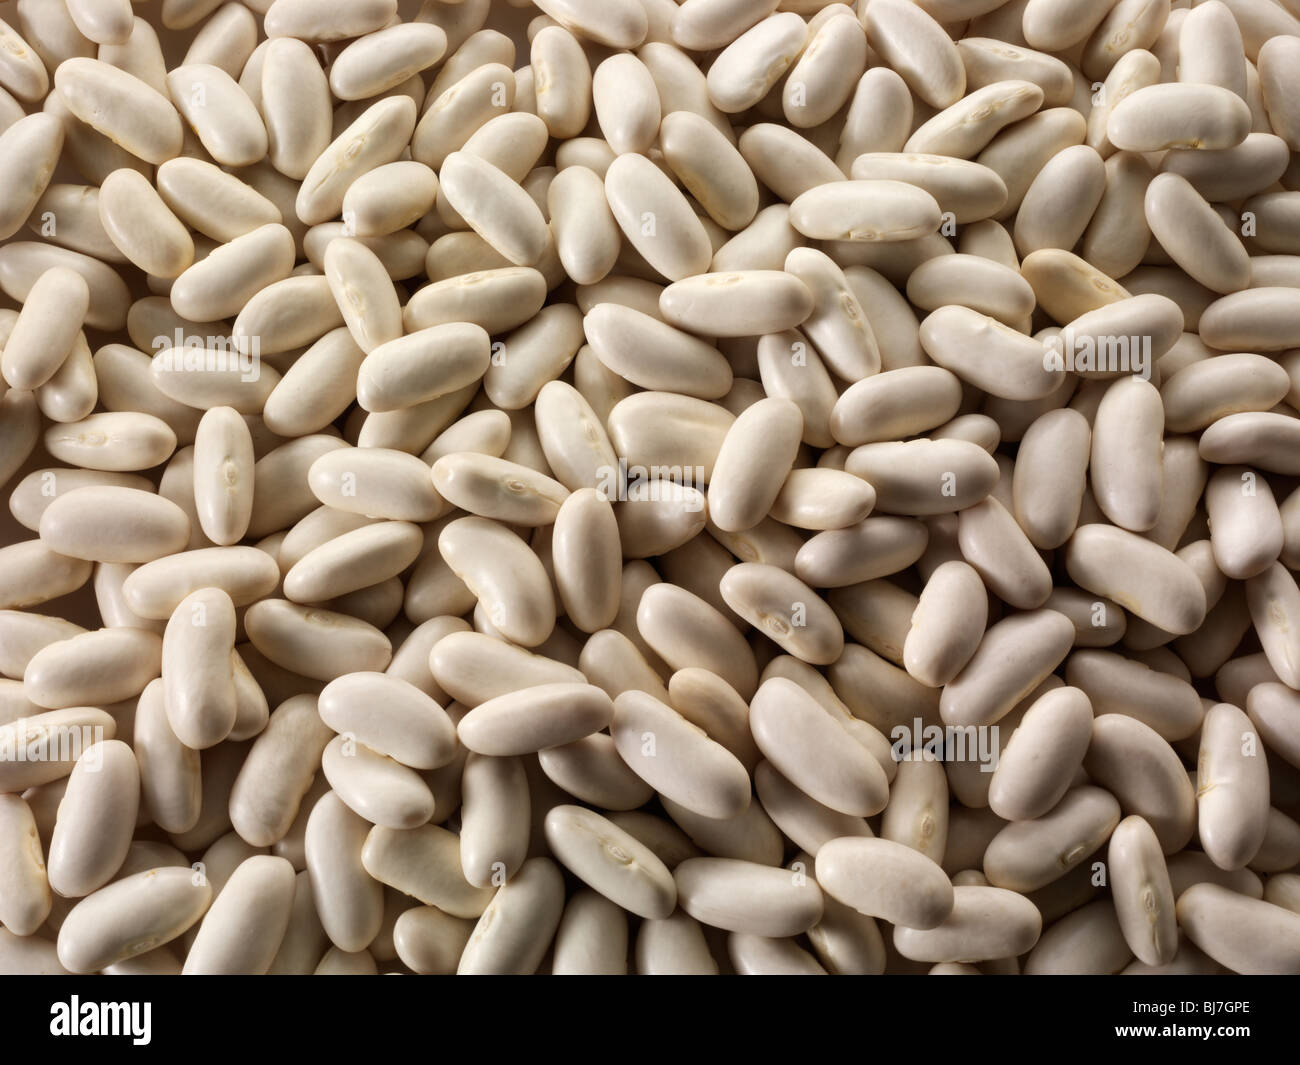 Whole dried argentin bean, alubia bean, white rajma, white kidney bean or cannellini bean, - close up full frame top shot Stock Photo